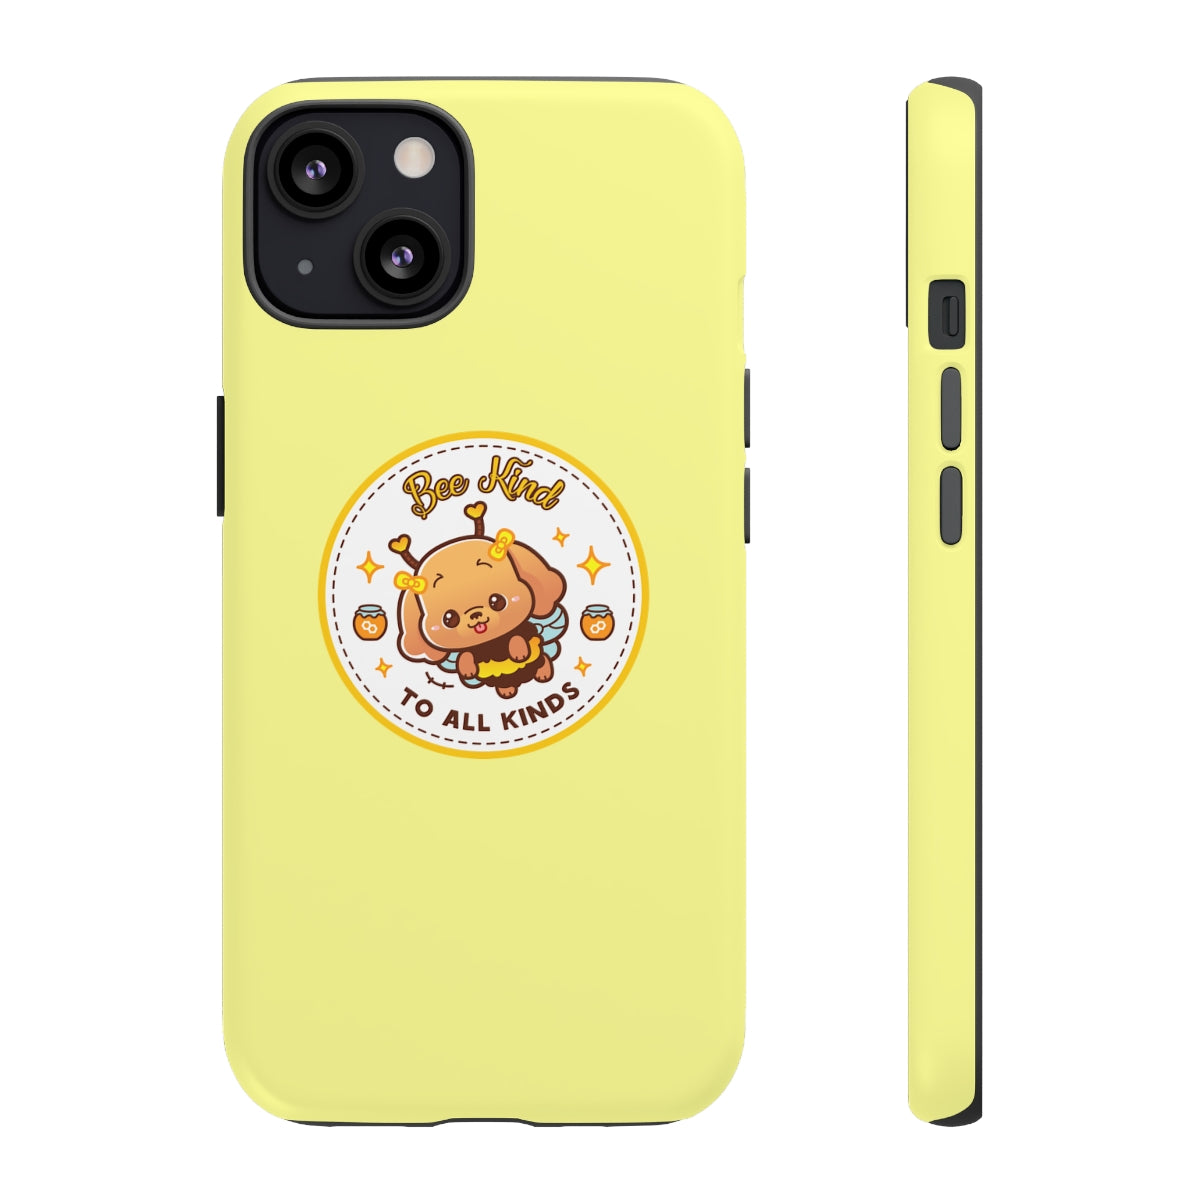 Cute Kawaii iPhone Case, Luxury iPhone Case, iPhone 12 13 Case, Pastel Yellow iPhone Case, Fashion iPhone Case